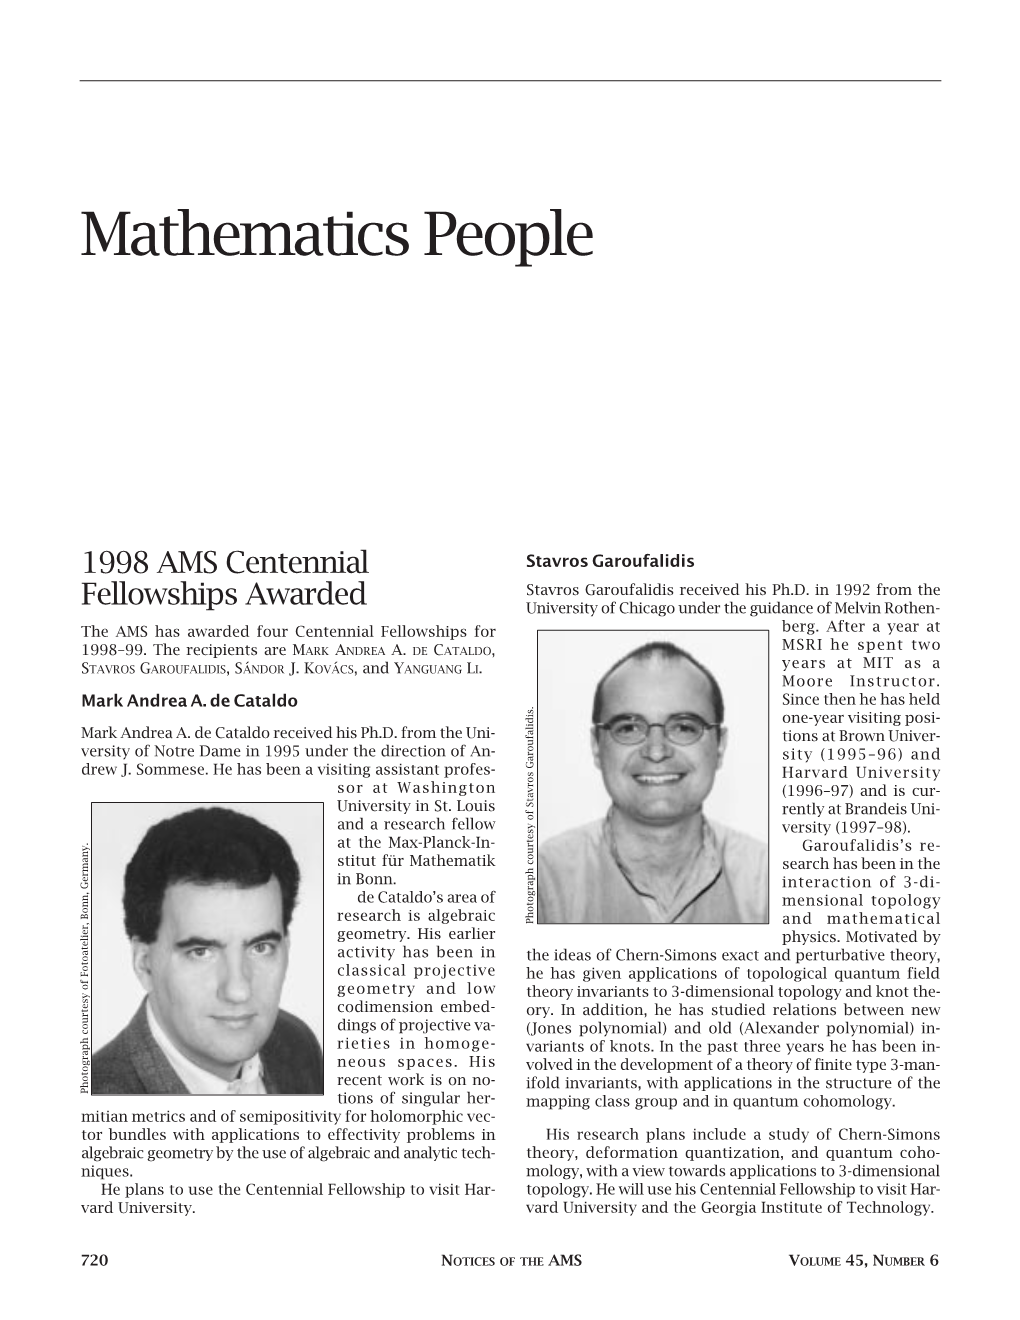 Mathematics People, Volume 45, Number 6